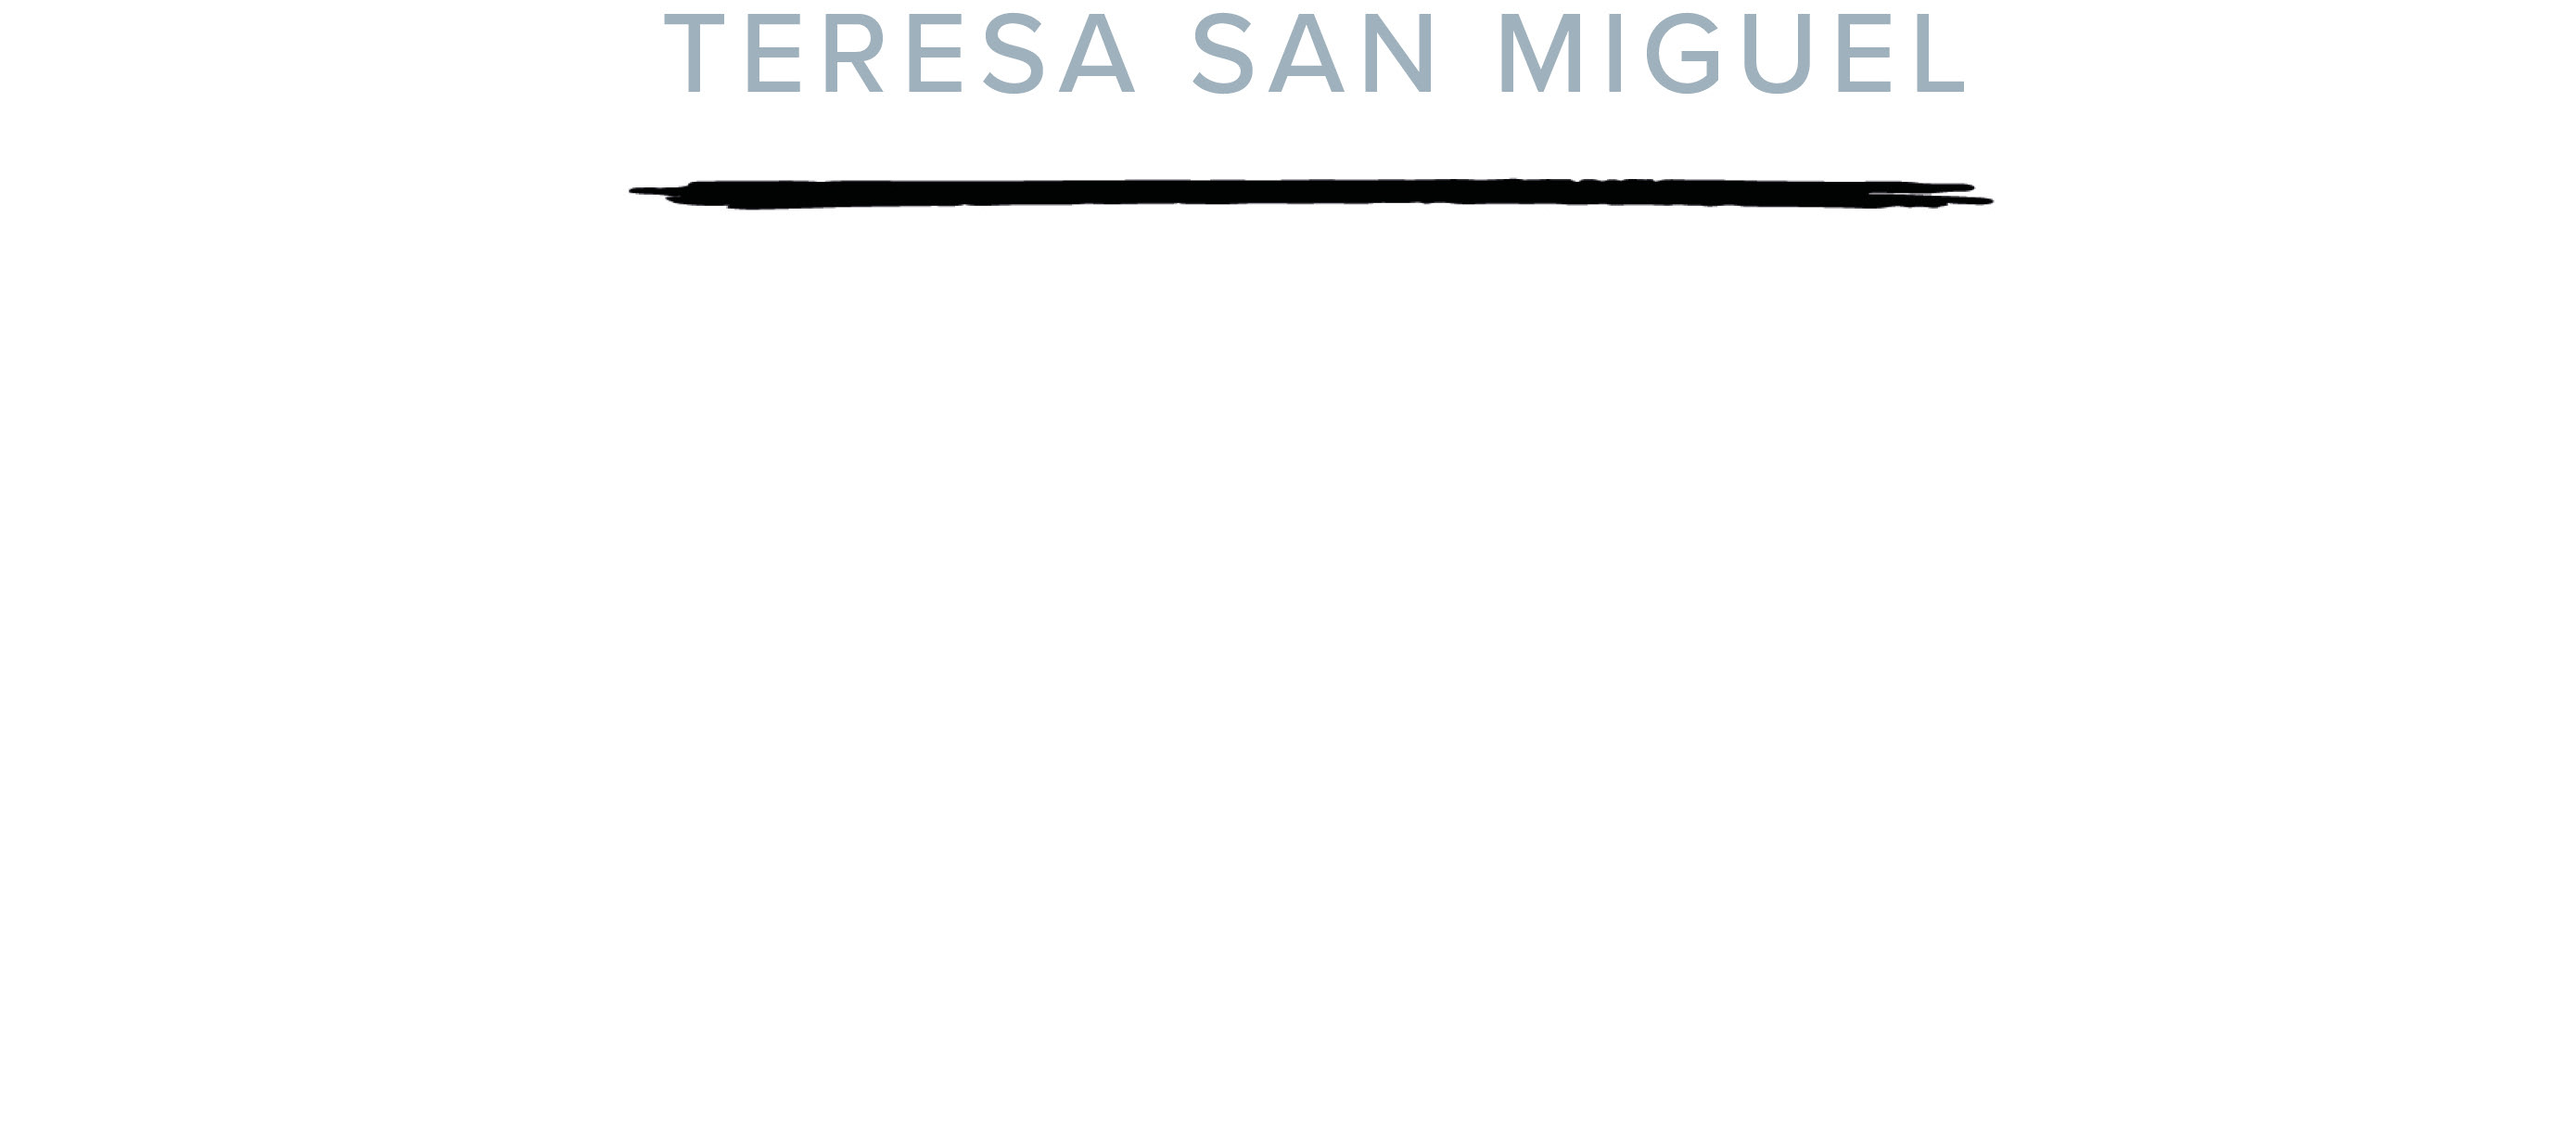 Teresa San Miguel